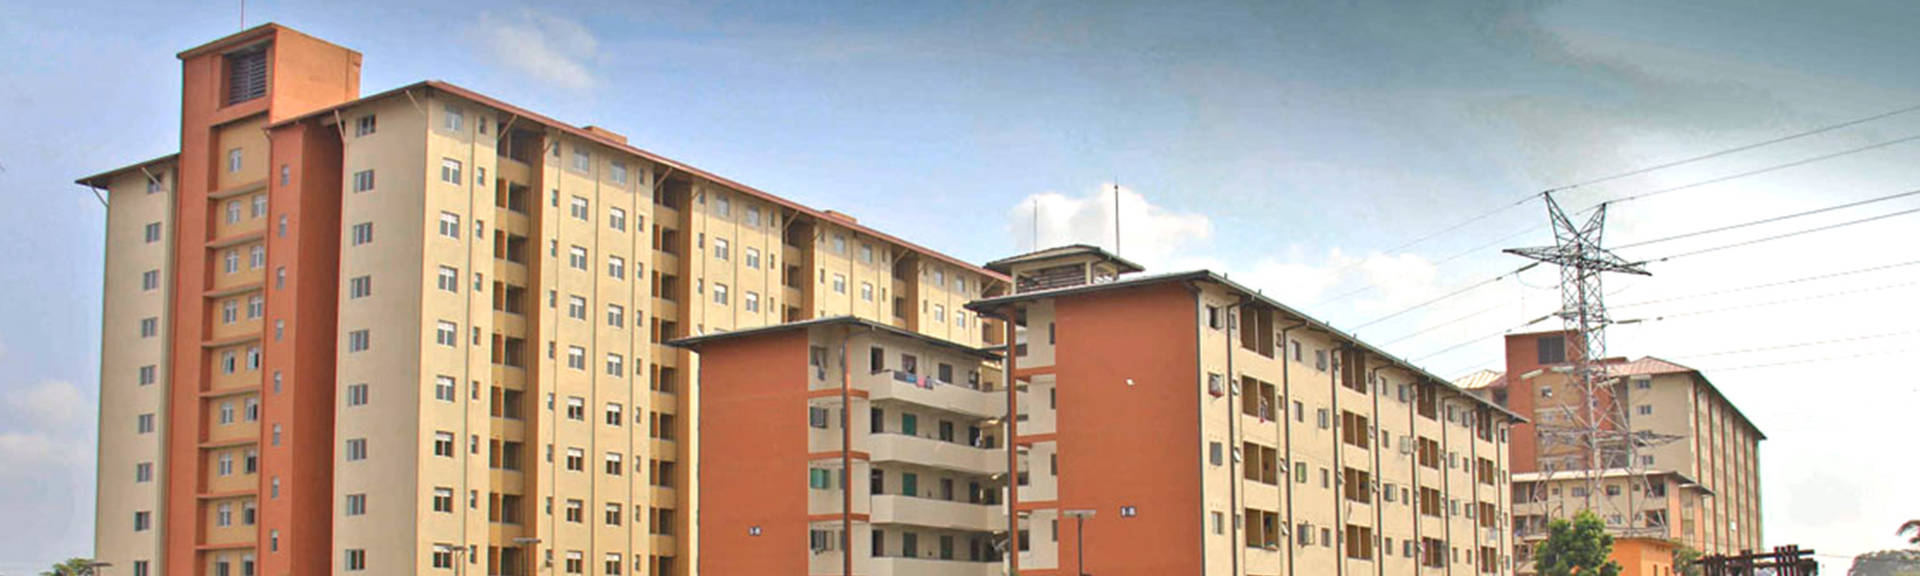 Mihindusenpura Housing Scheme, Colombo